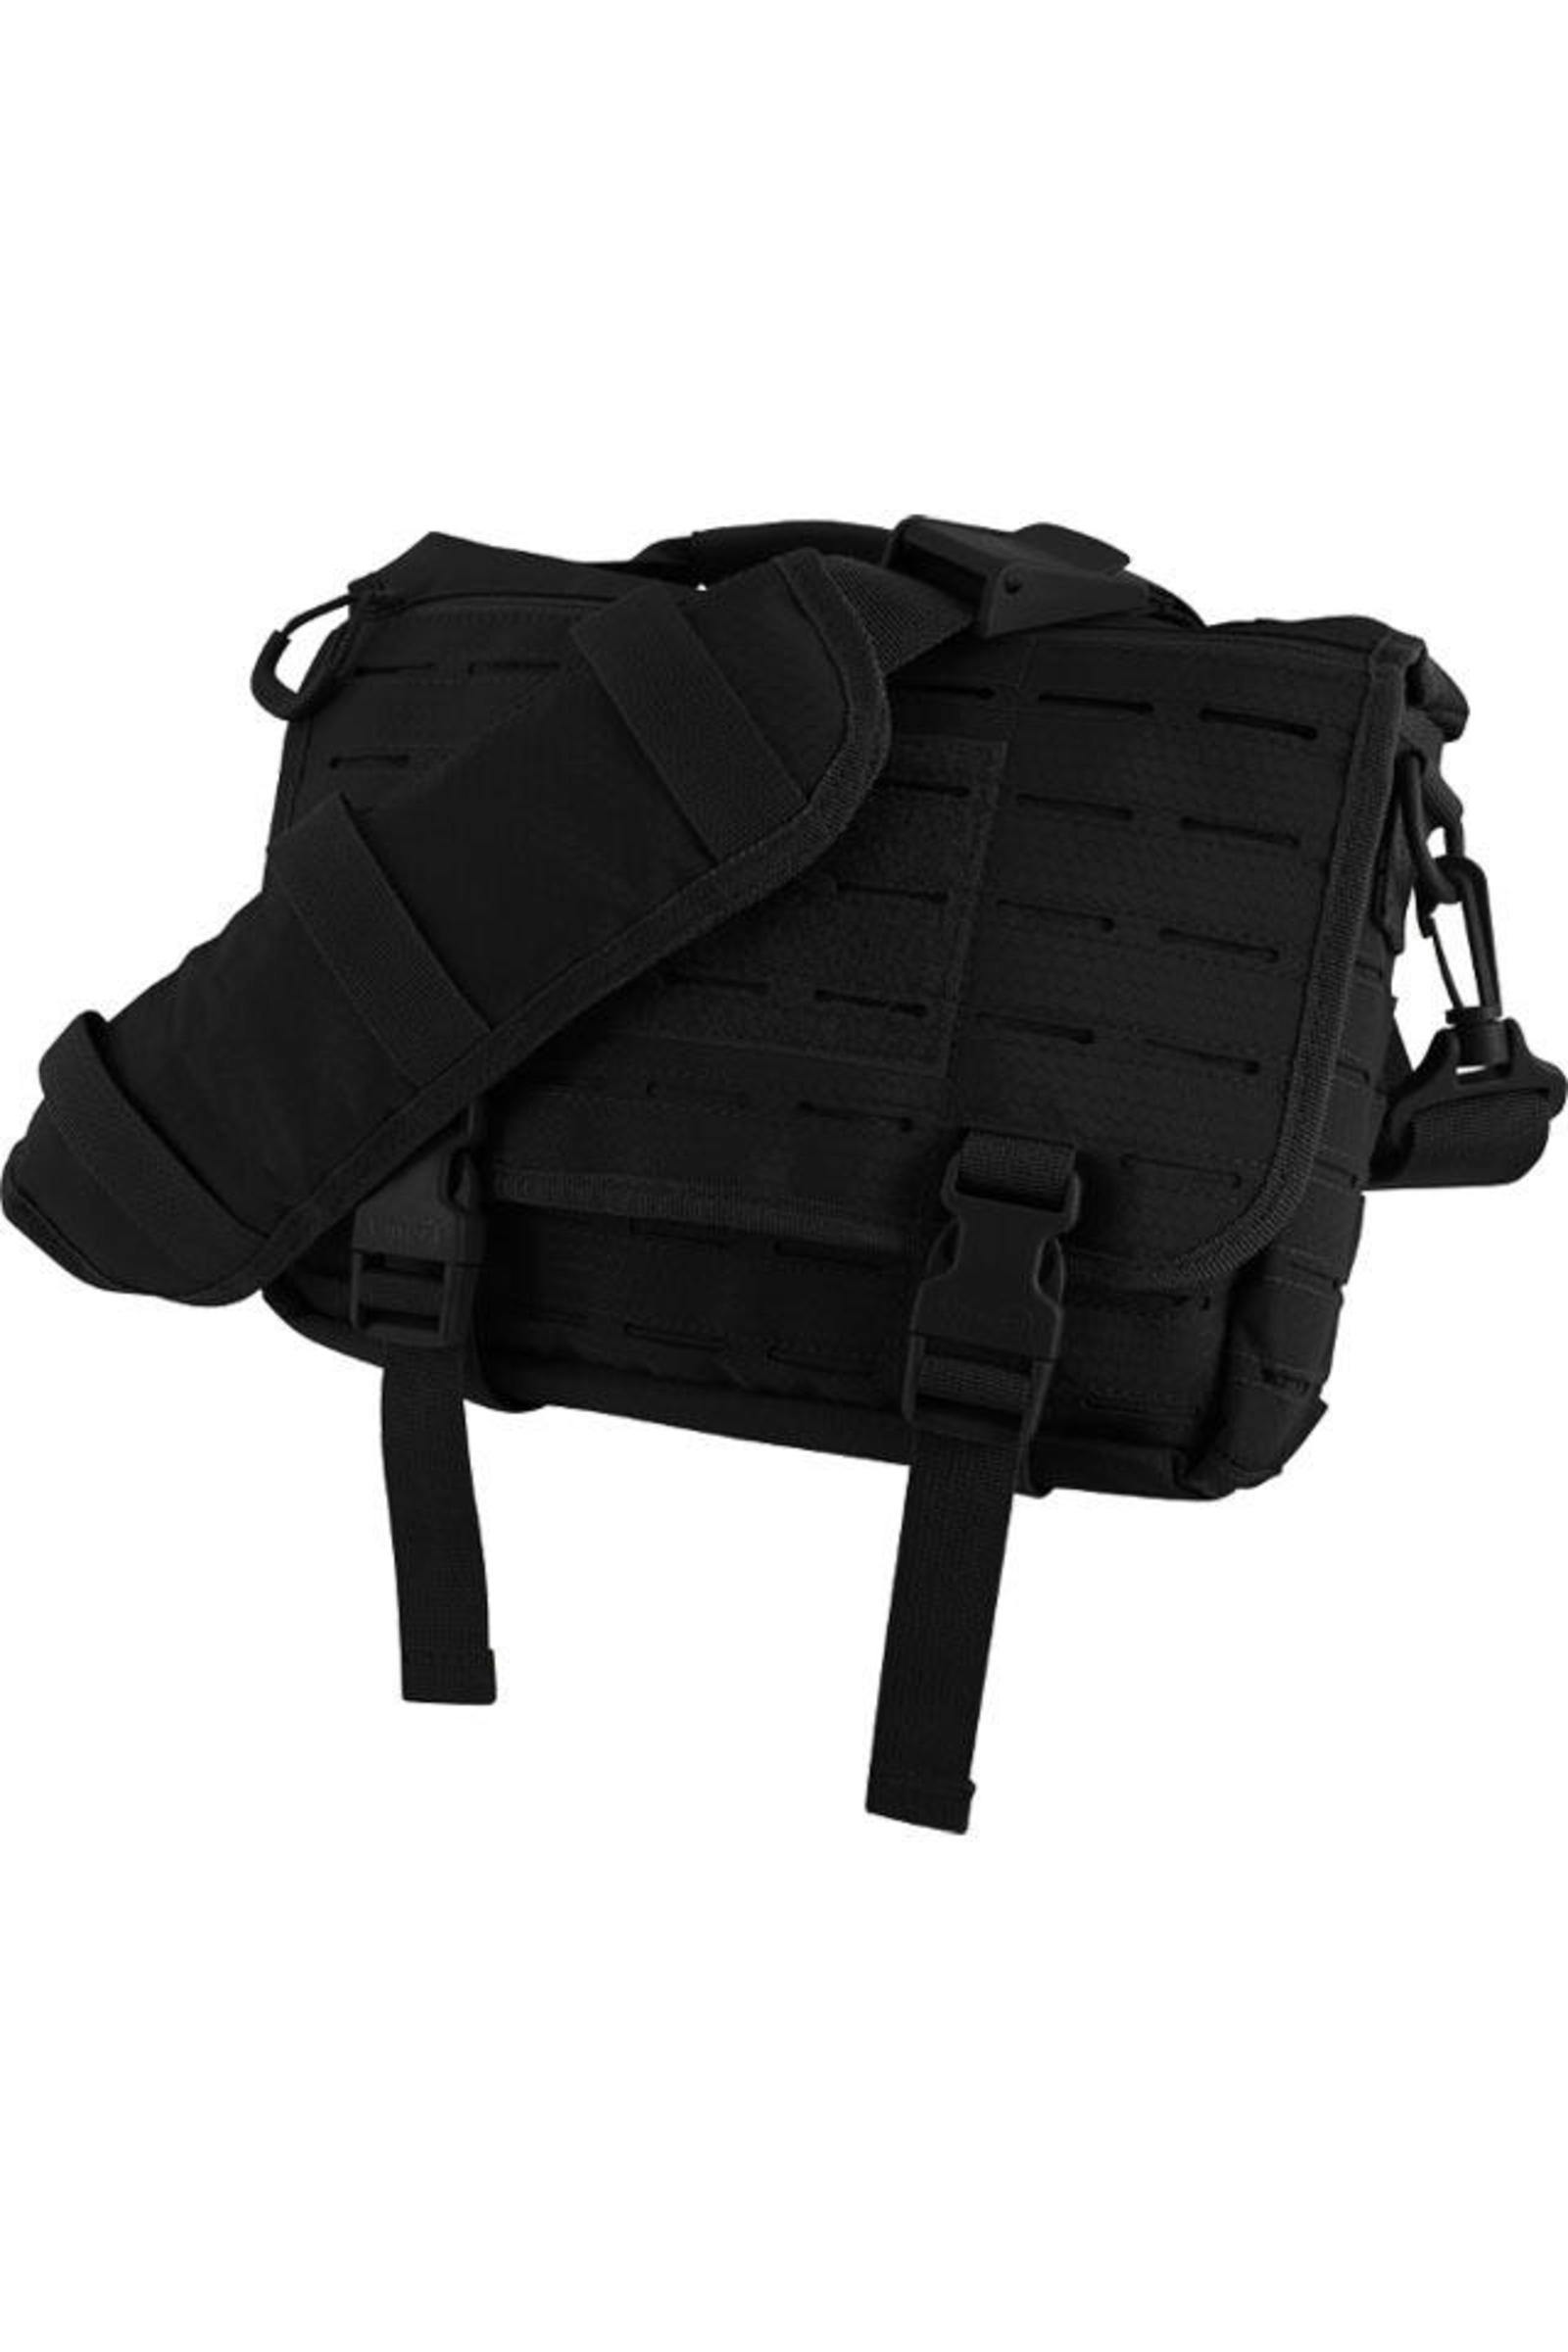 Viper Tactical - Snapper Pack 7.5L Shoulder Pack